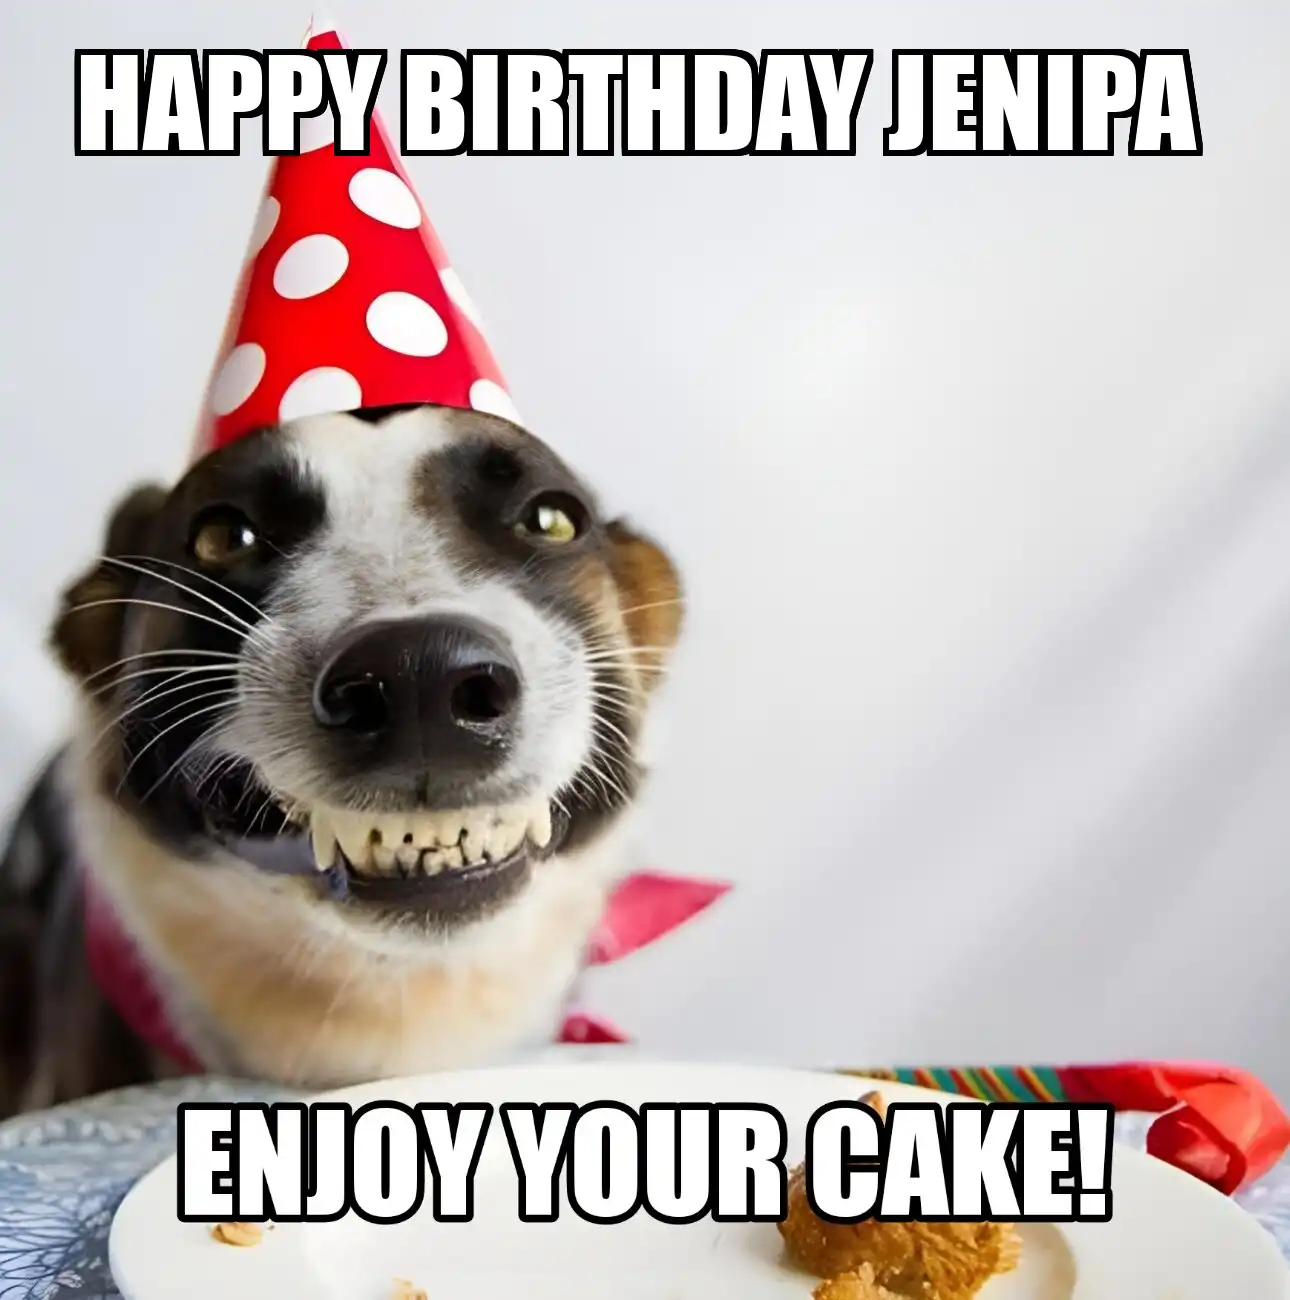 Happy Birthday Jenipa Enjoy Your Cake Dog Meme